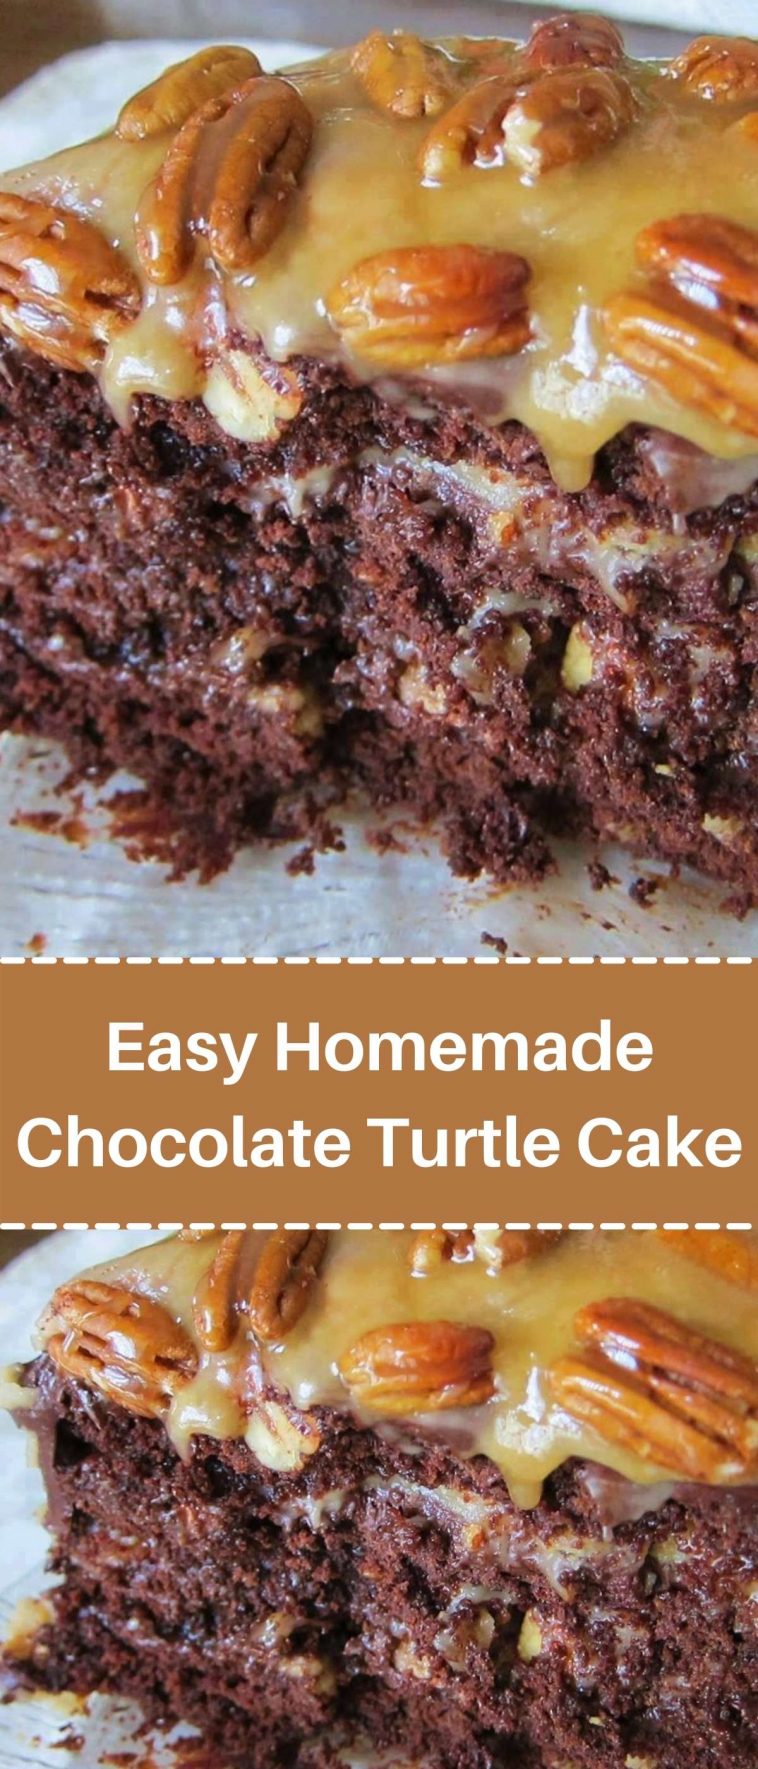 Easy Homemade Chocolate Turtle Cake Recipe